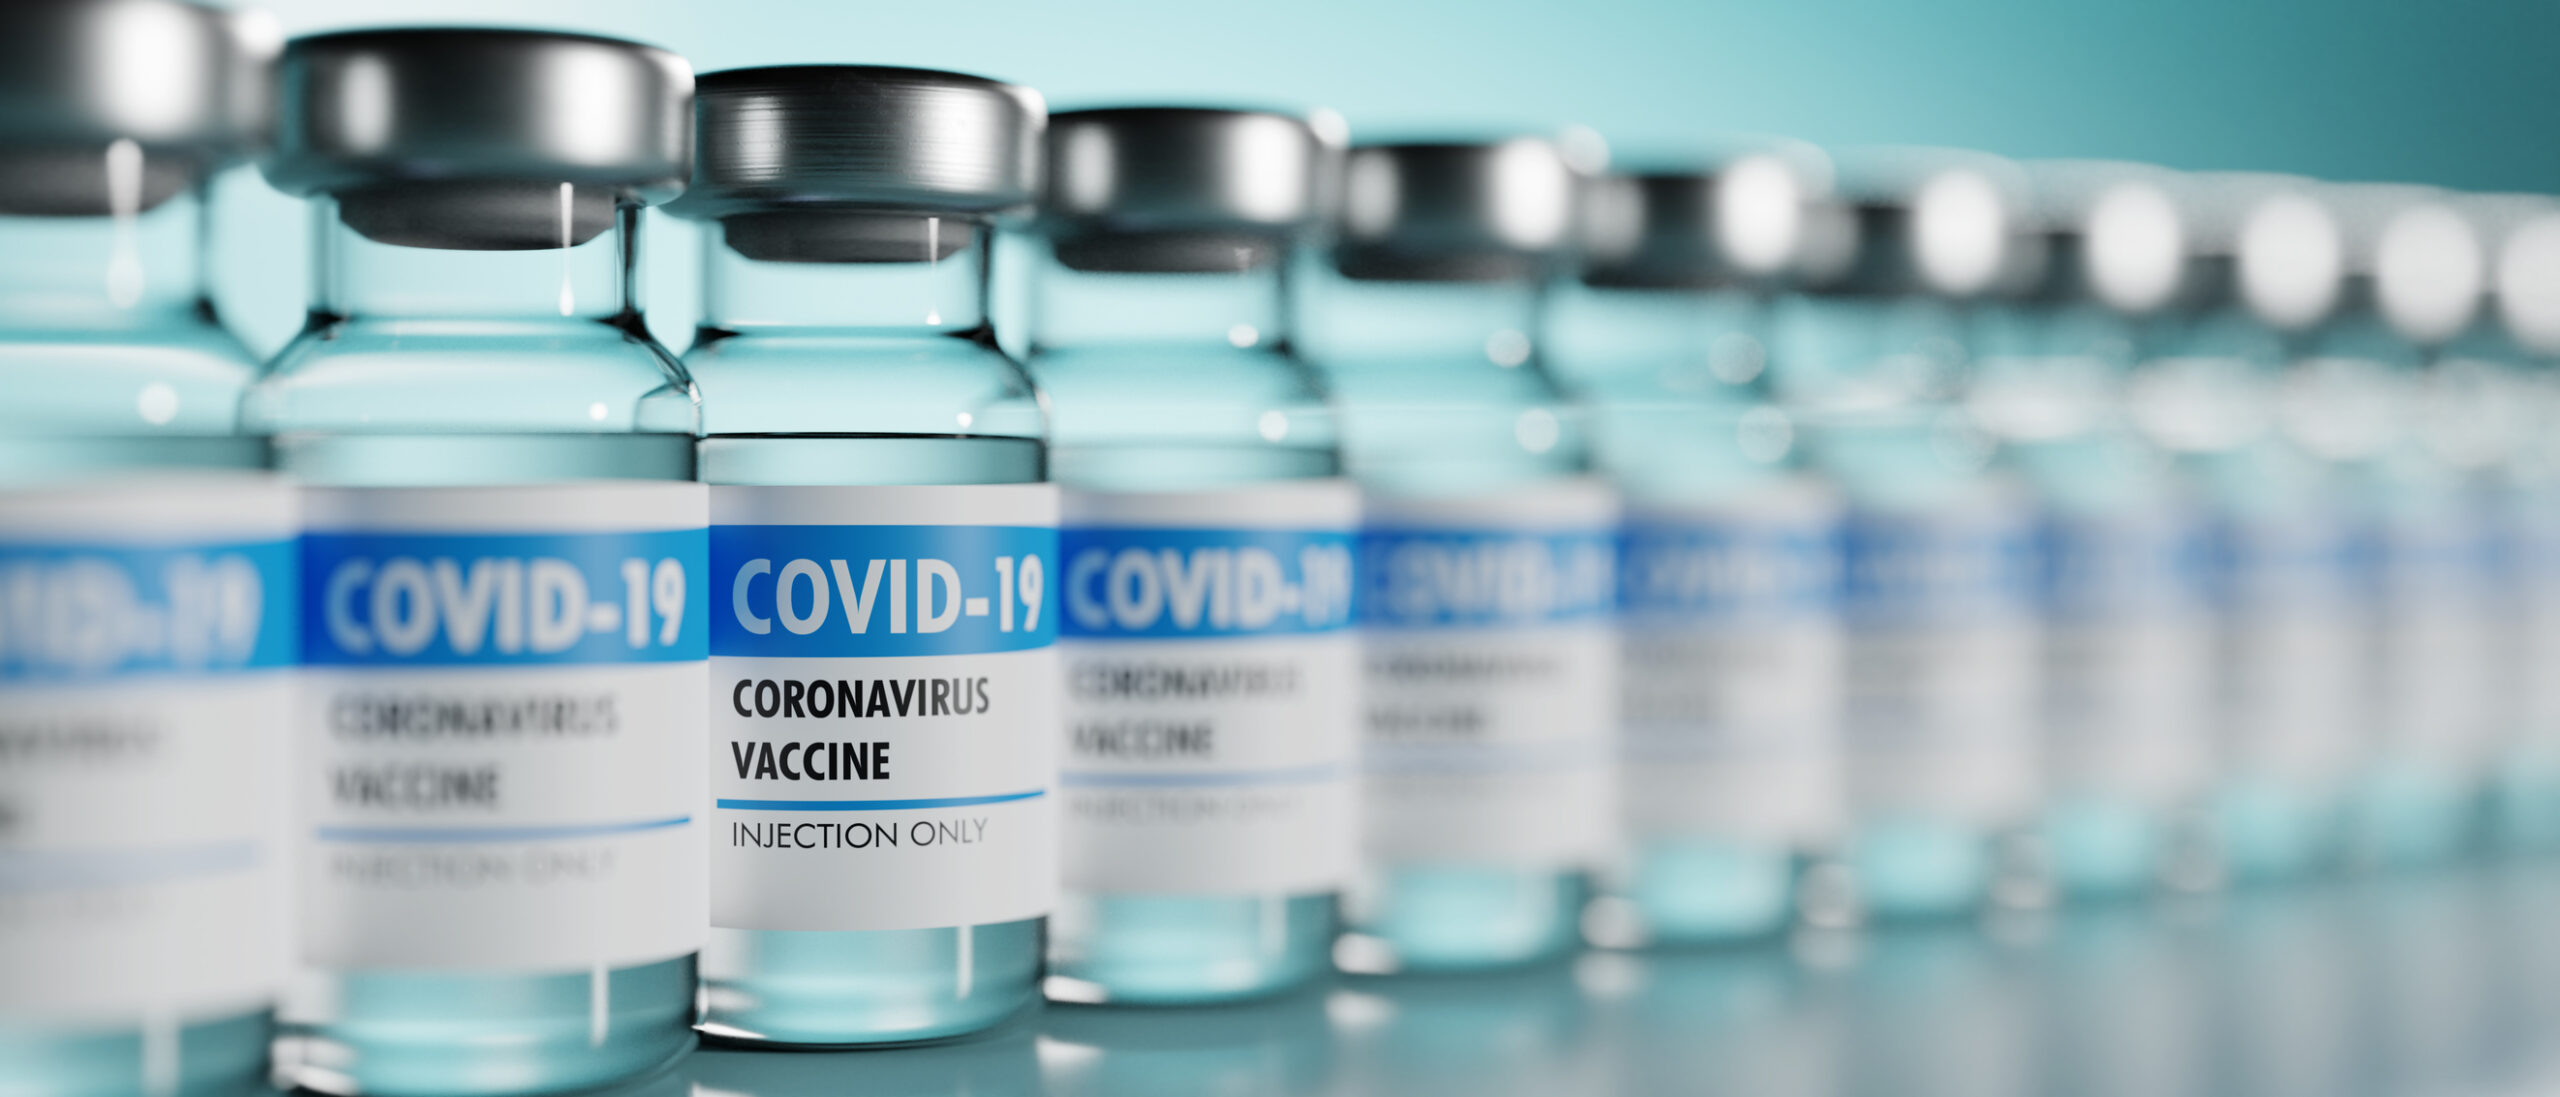 Legacy Media Recognizes Potential COVID Vaccine Risks